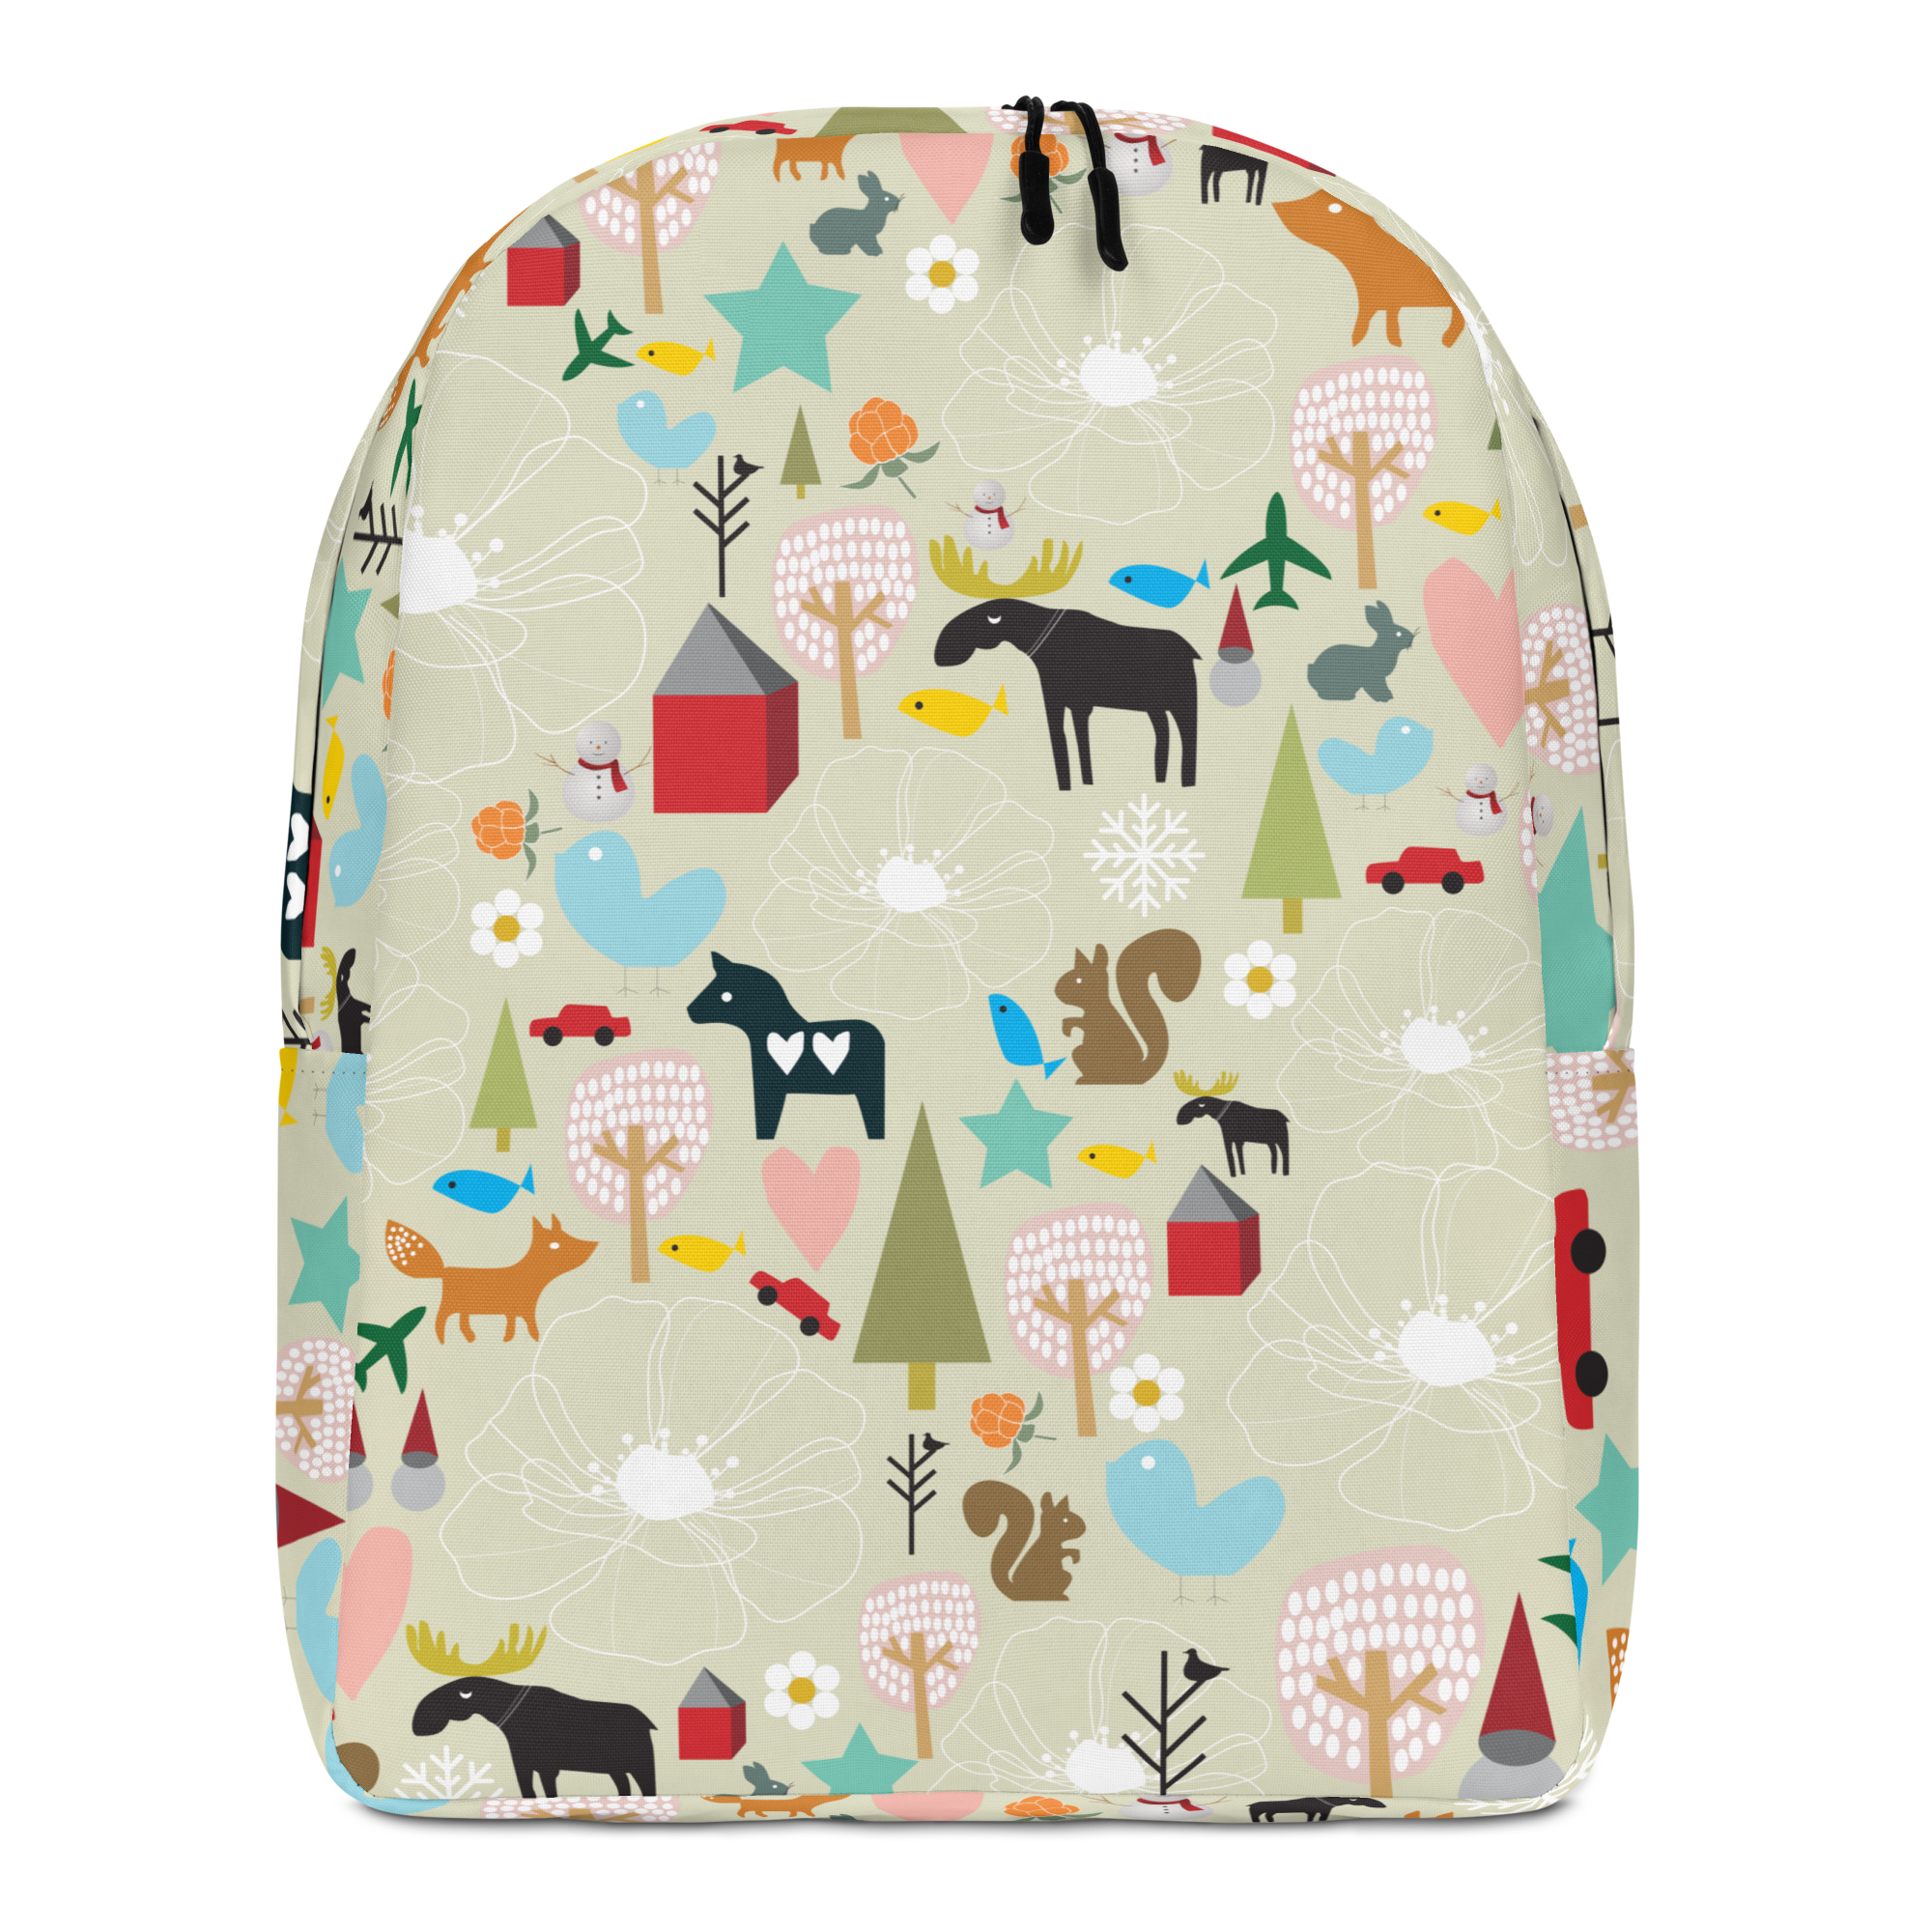 Baby Room Design | Minimalist Backpack